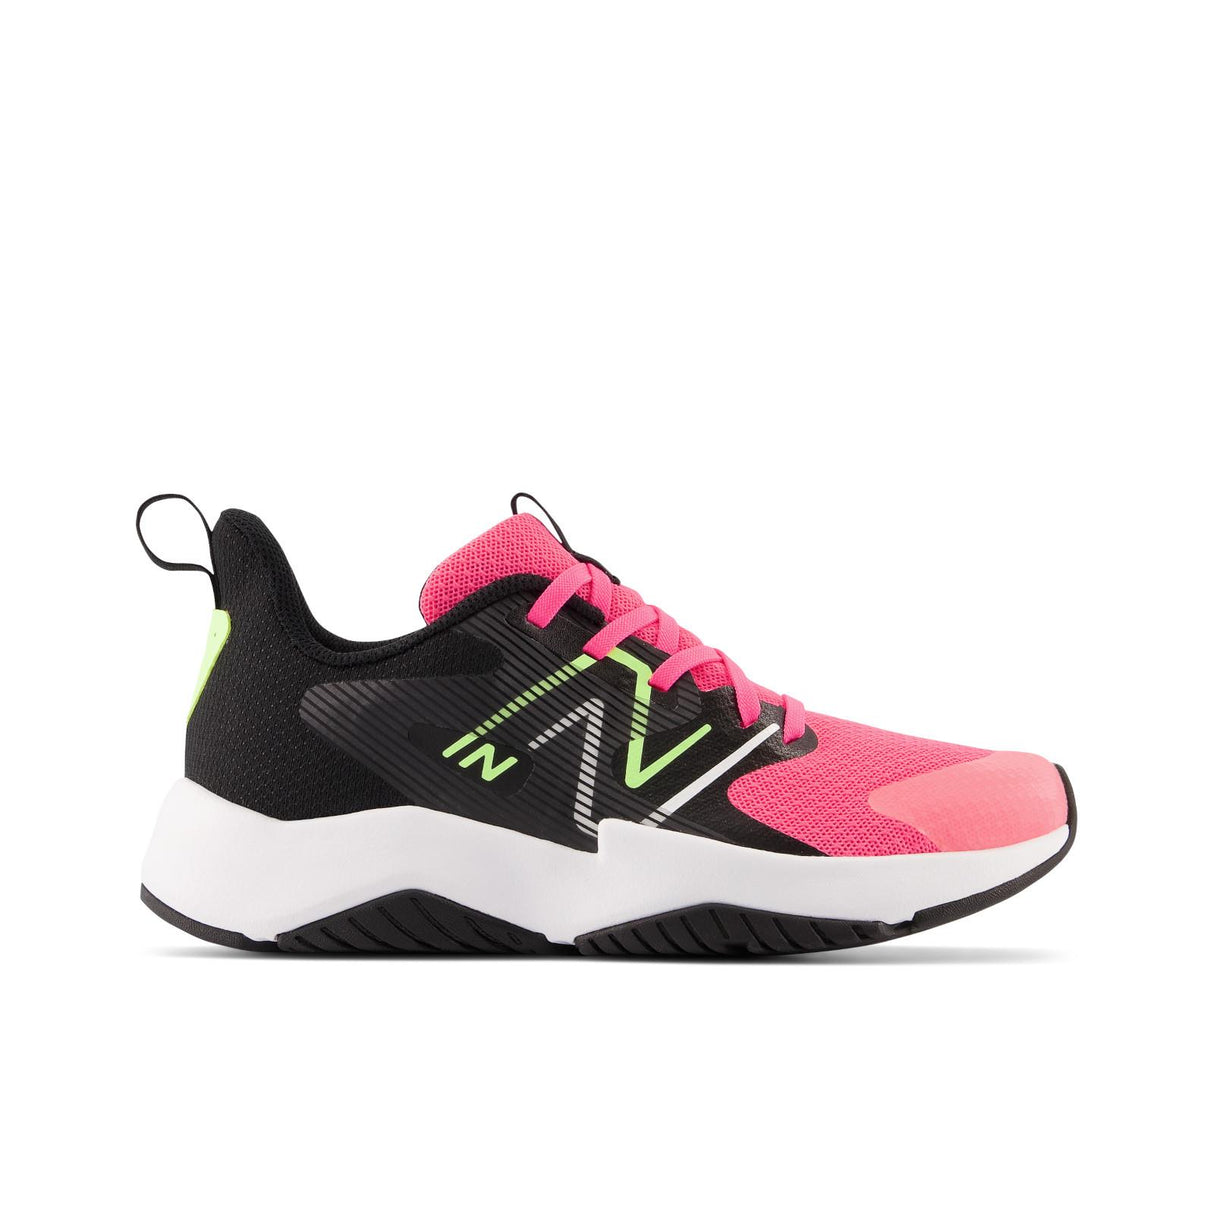 New Balance Rave Run V2 - Kids Running Shoe Black-Pink | Sneakers Plus